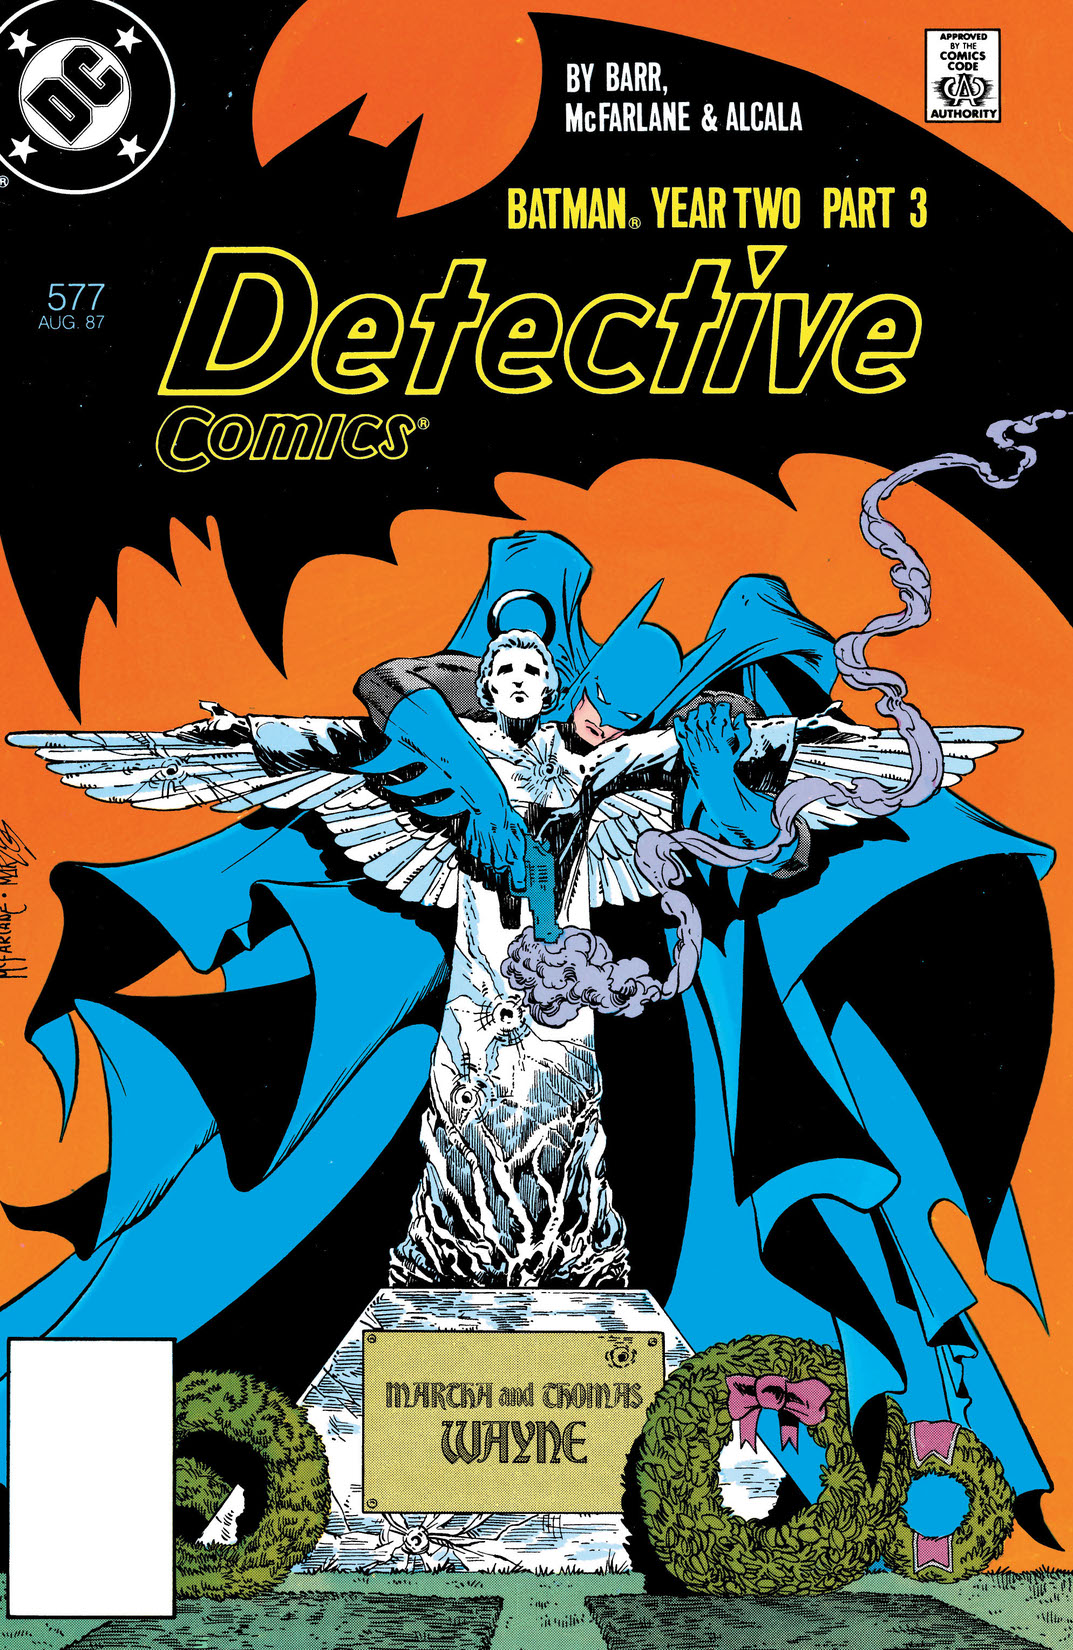 Detective Comics (1937-) #577 preview images